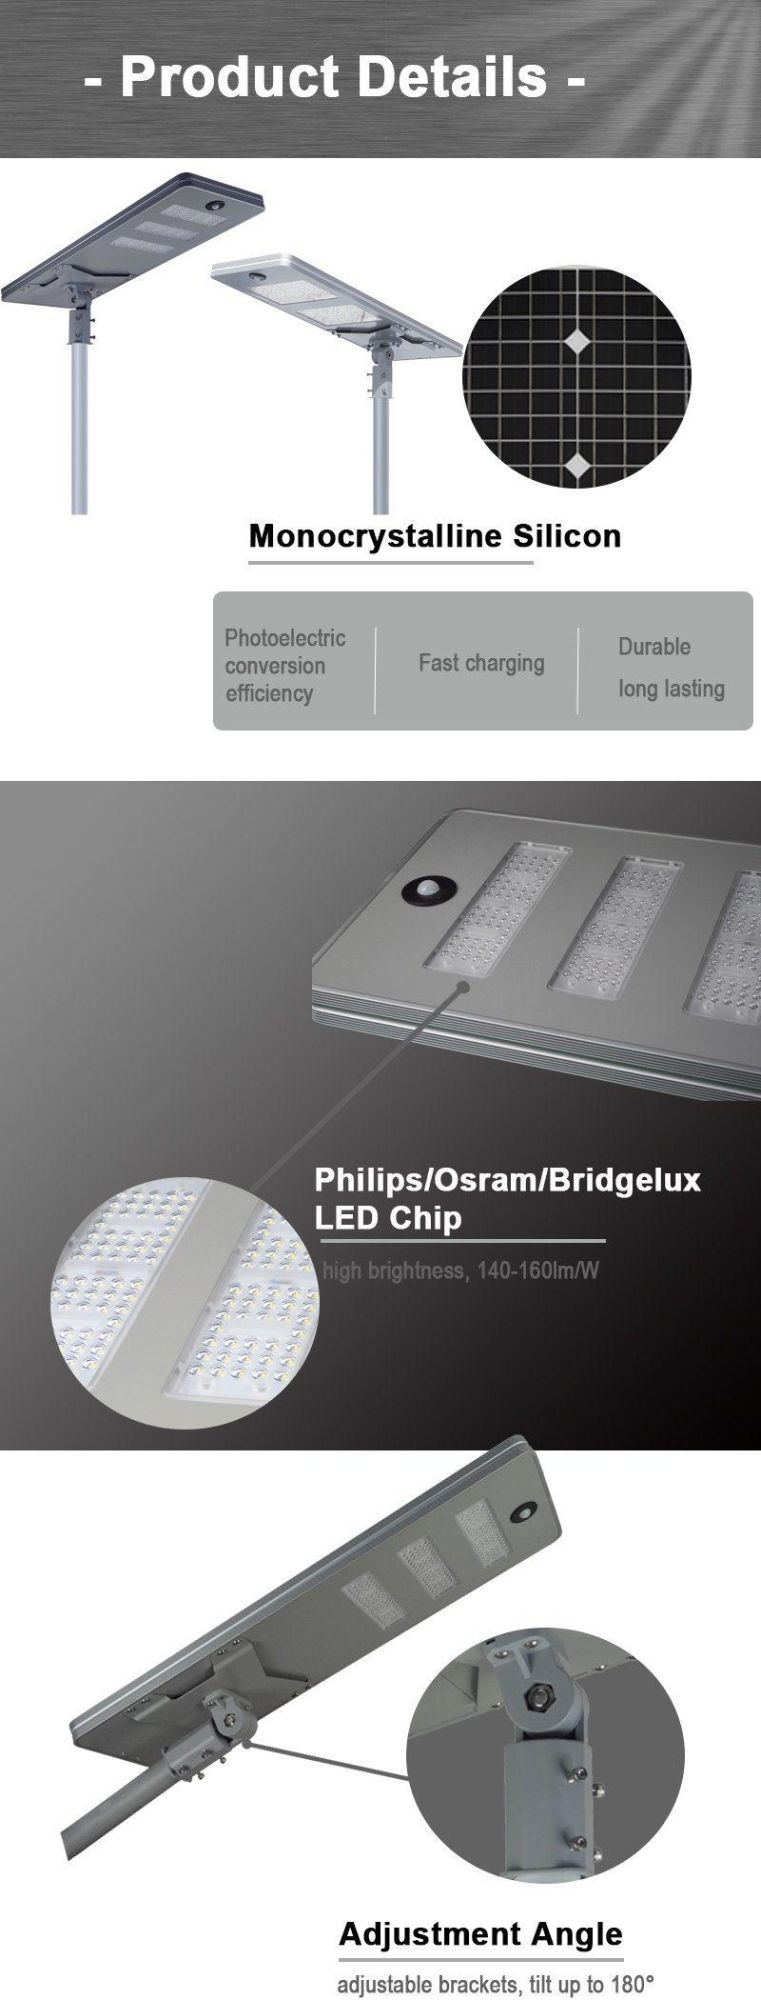 Waterproof IP65 Energy Item Integrated LED Power 60W Solar Street Light